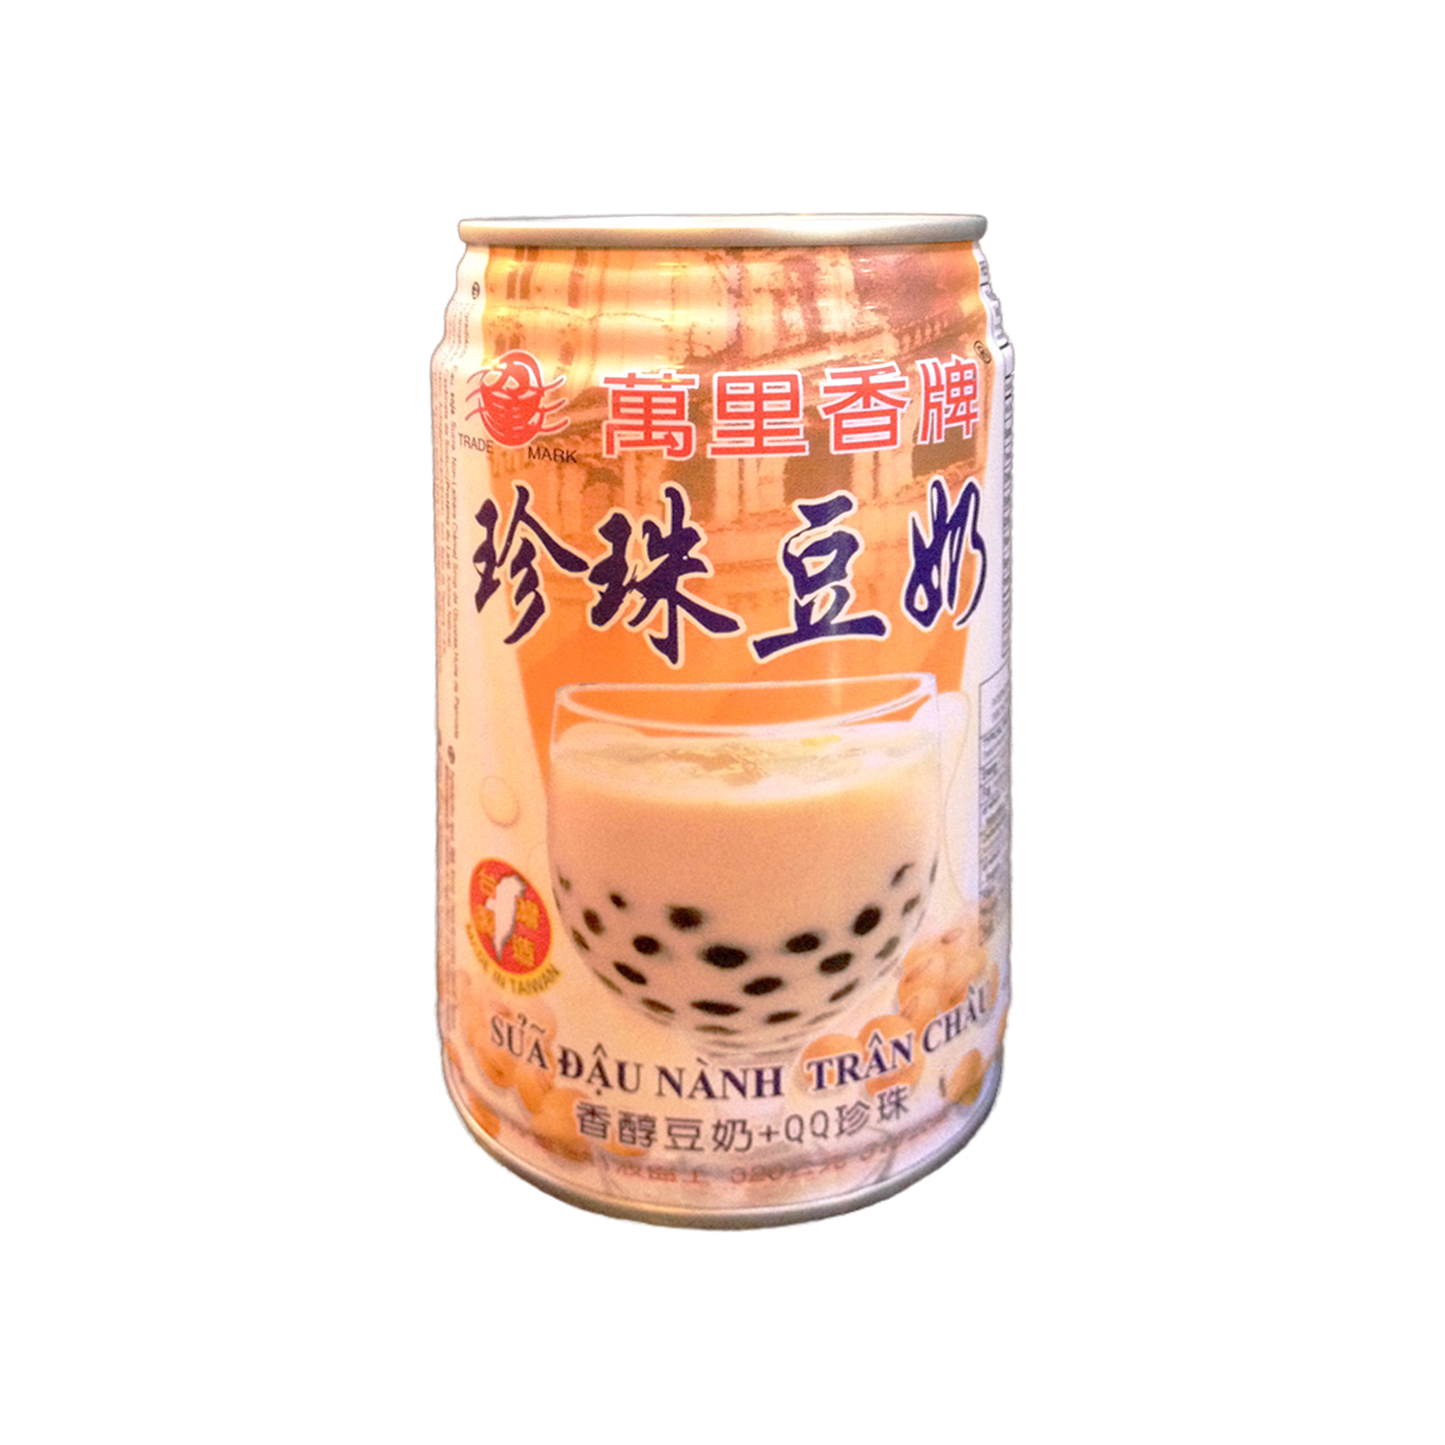 MLS SOY DRINK+TAPIOCA BALL 万里香珍珠豆奶